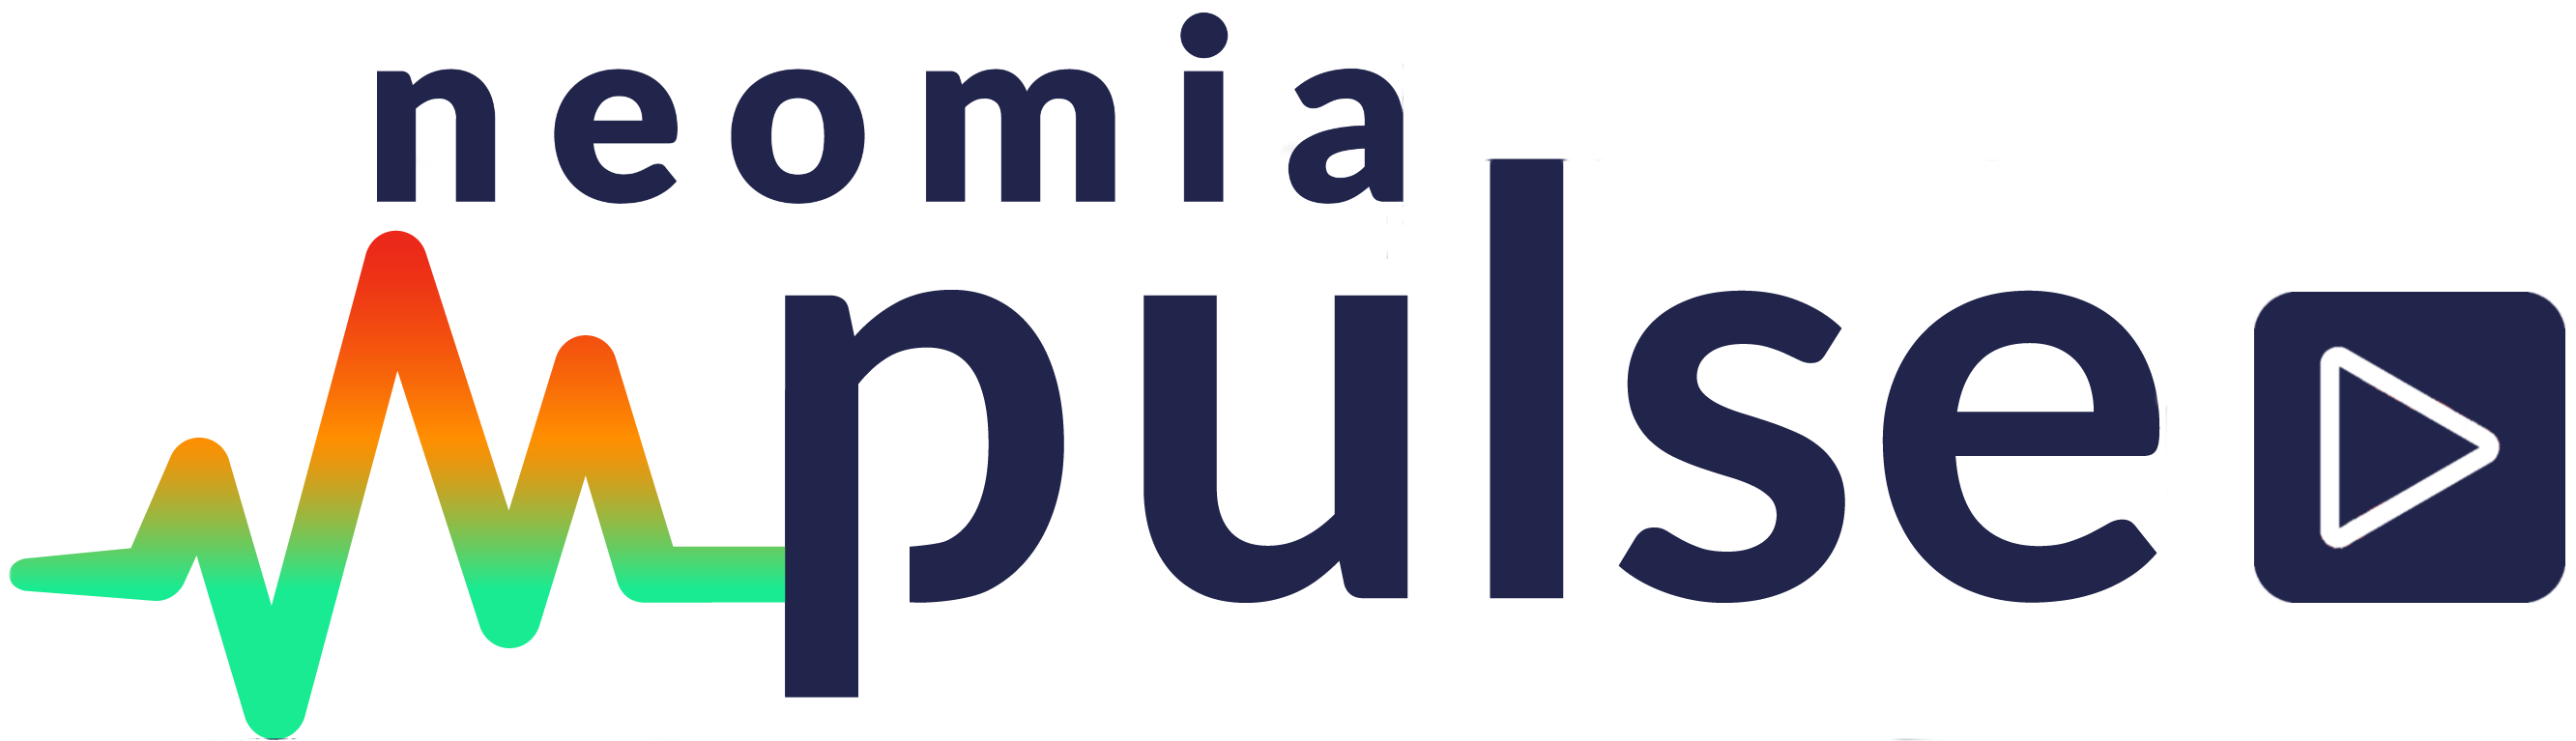 Neomia pulse Play blue logo